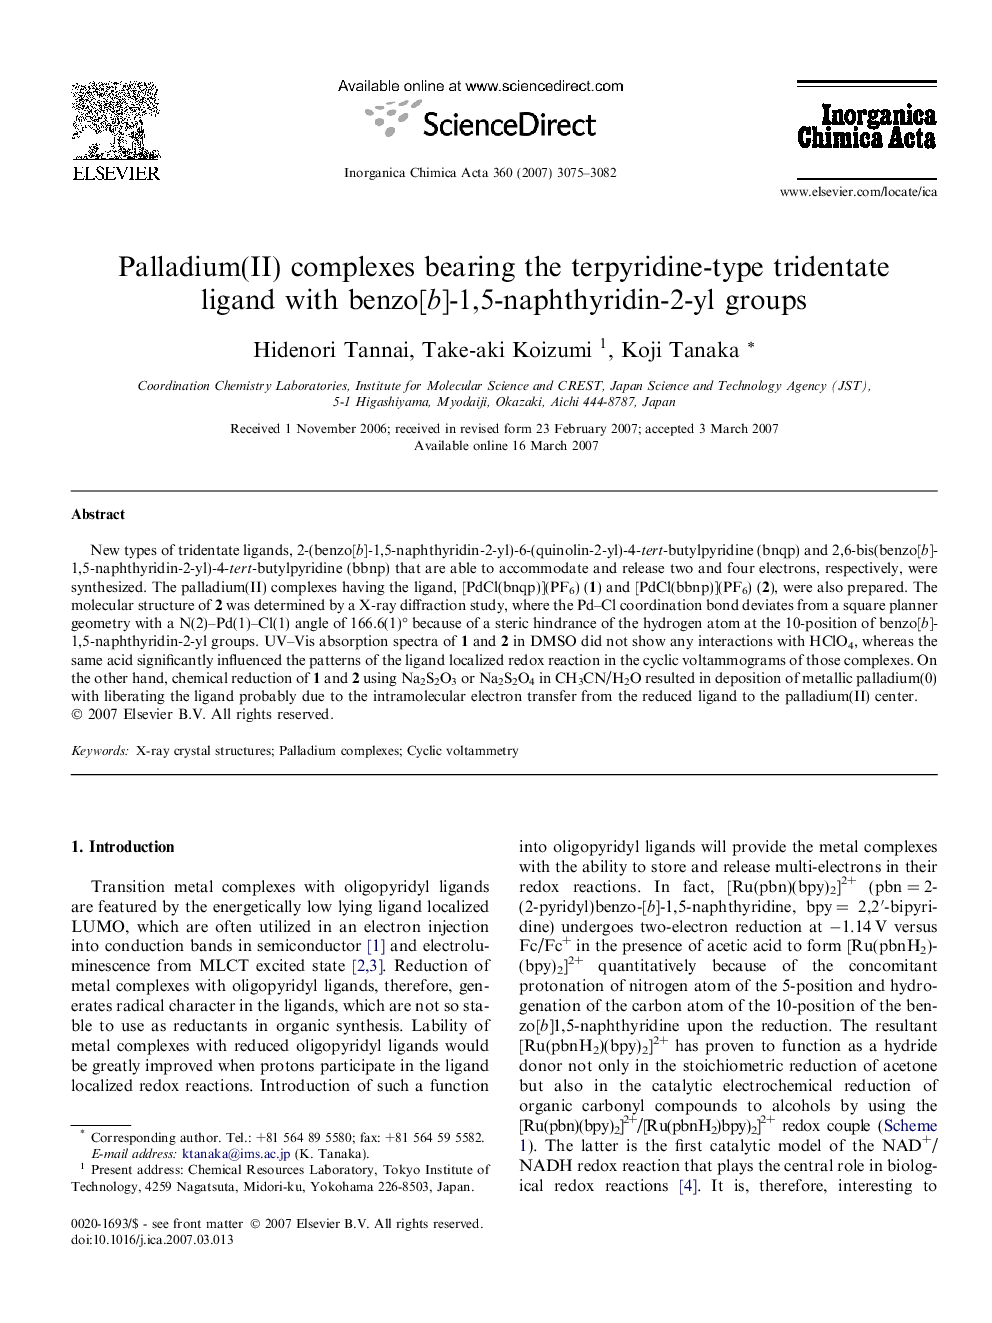 Palladium(II) complexes bearing the terpyridine-type tridentate ligand with benzo[b]-1,5-naphthyridin-2-yl groups